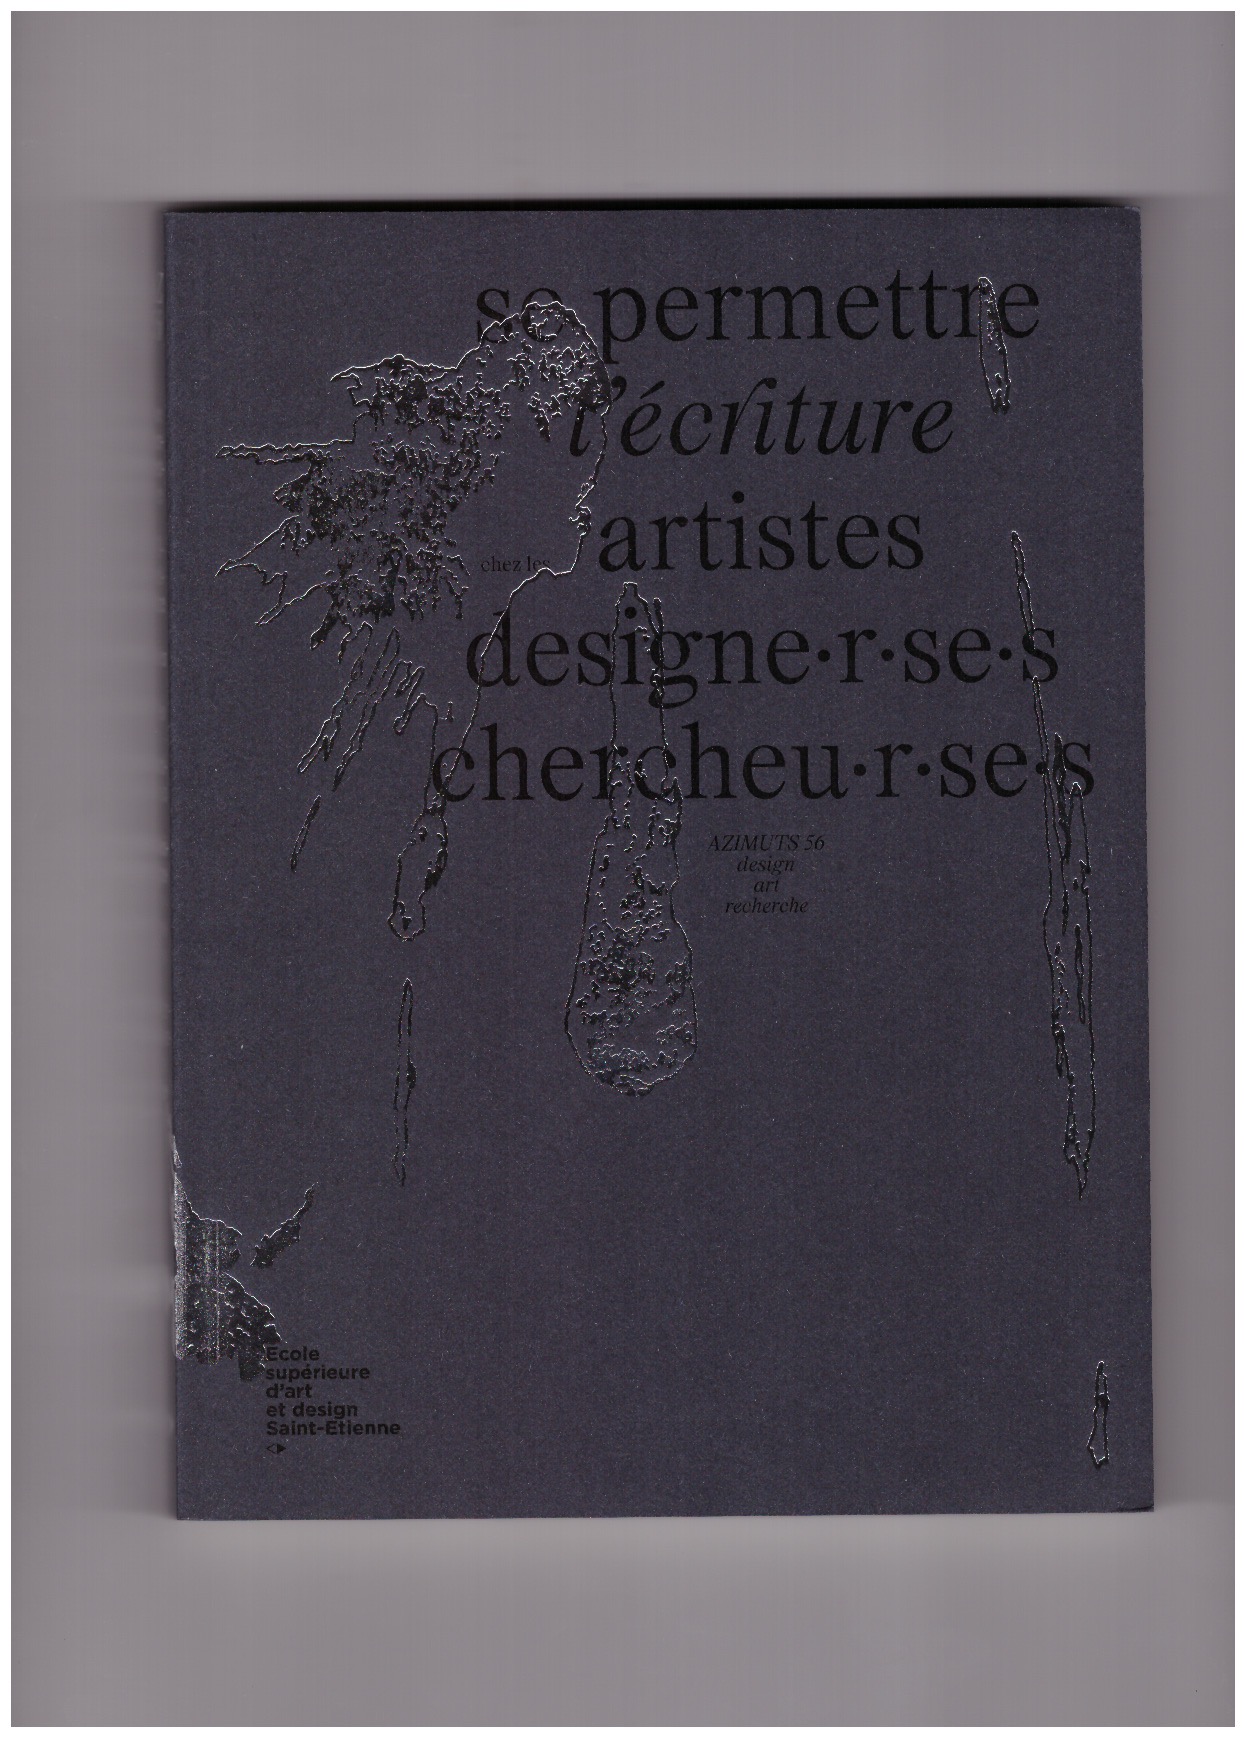 BORKOWSKA, Karolina Borkowska; SAHUQUET, Lucie (eds.) - Azimuts #56 se permettre l'écriture : artistes, designe.r.se.s, chercheu.r.se.s